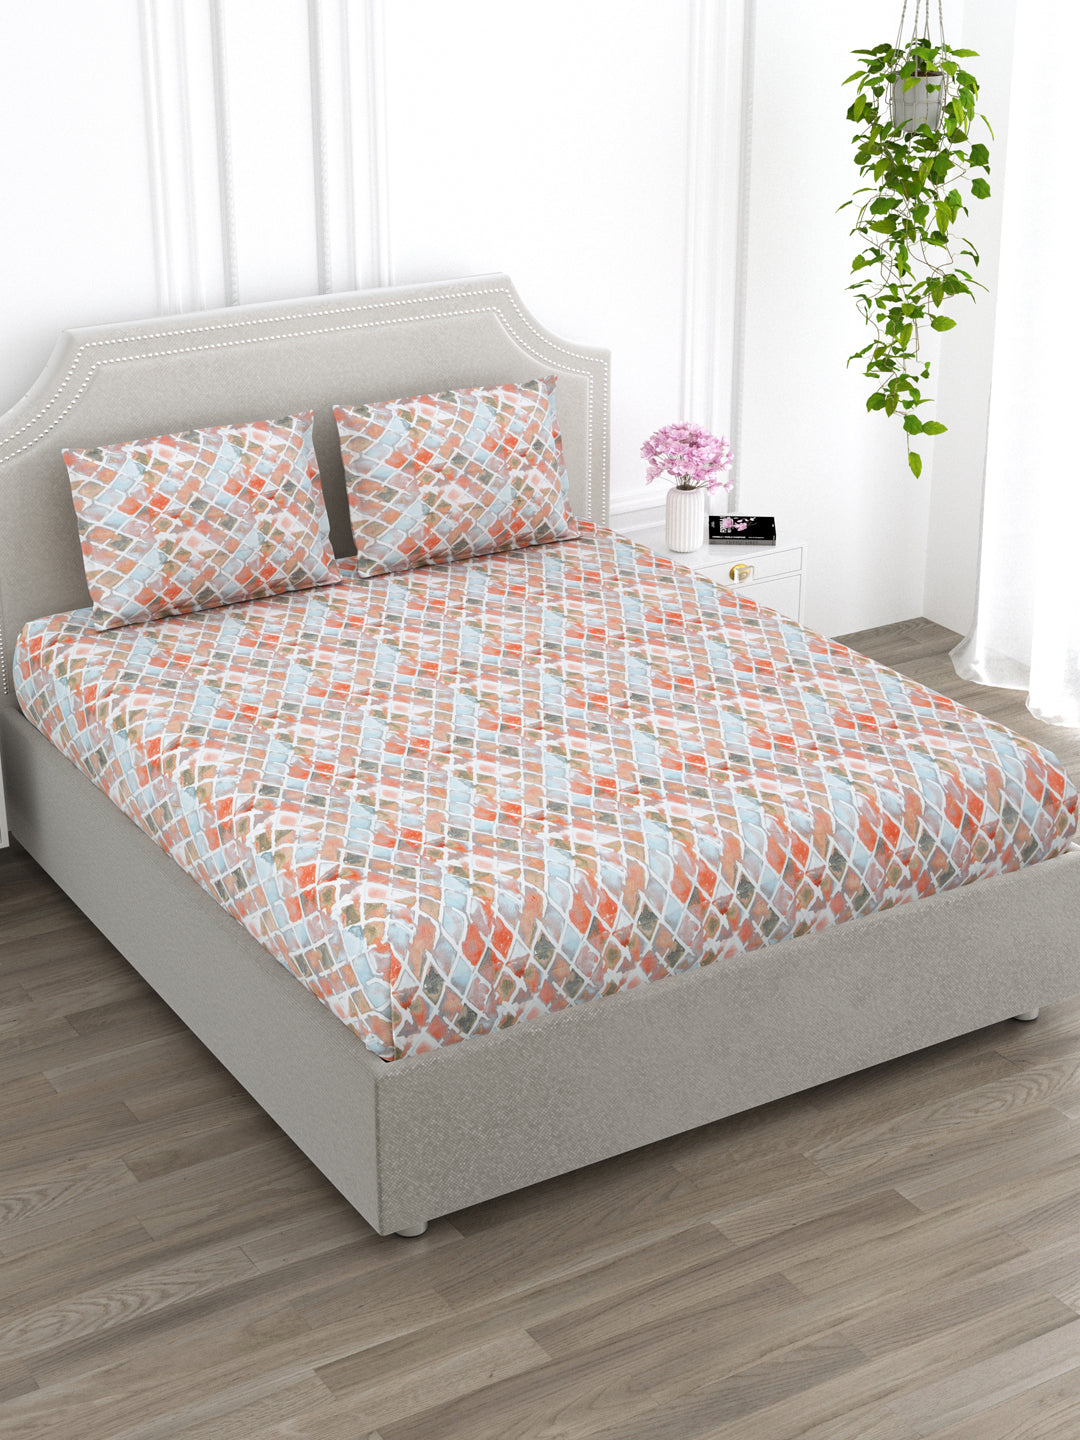 White & Orange Geometric King Size Bed Cotton Linen